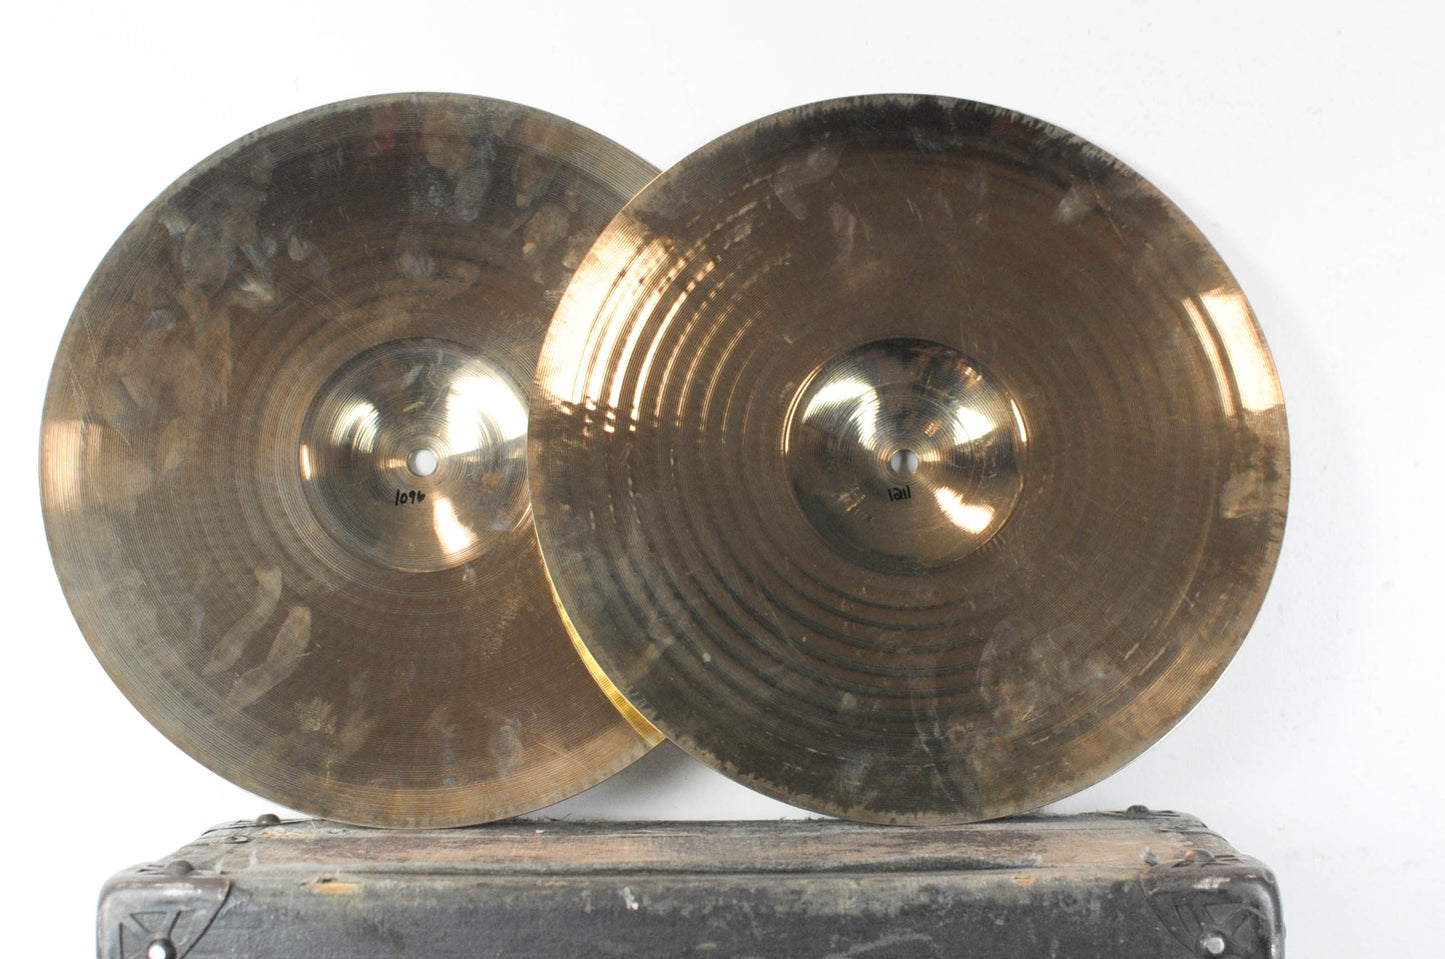 2011 Zildjian A Custom 14" Hi Hat Cymbals 1096g 1211g